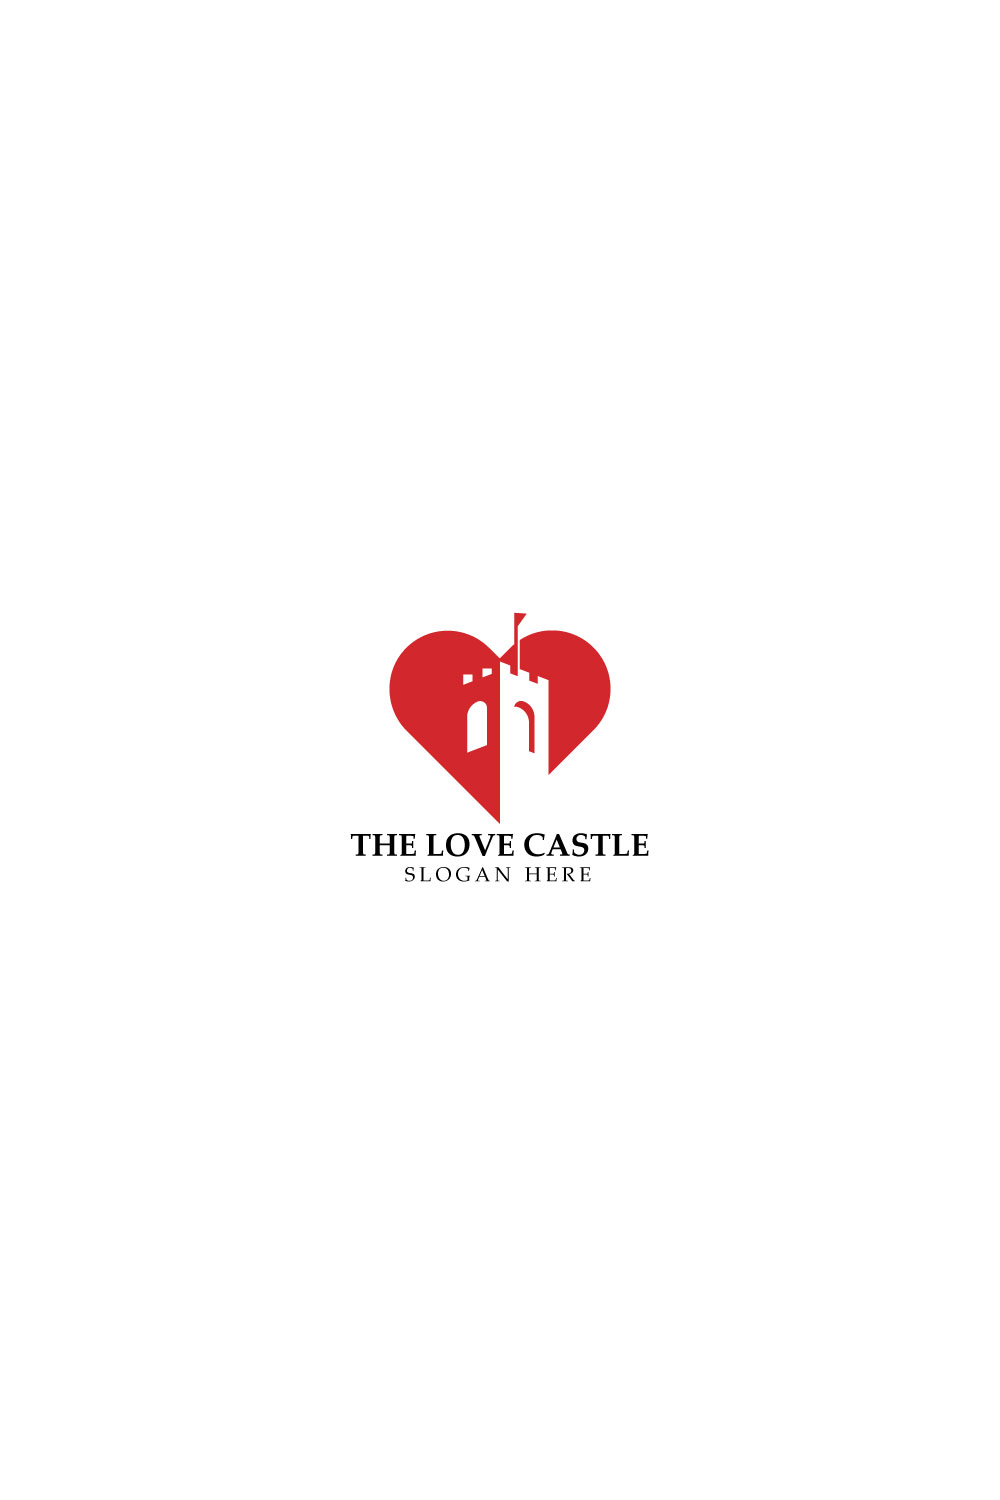 Love and castle negative space logo design pinterest preview image.